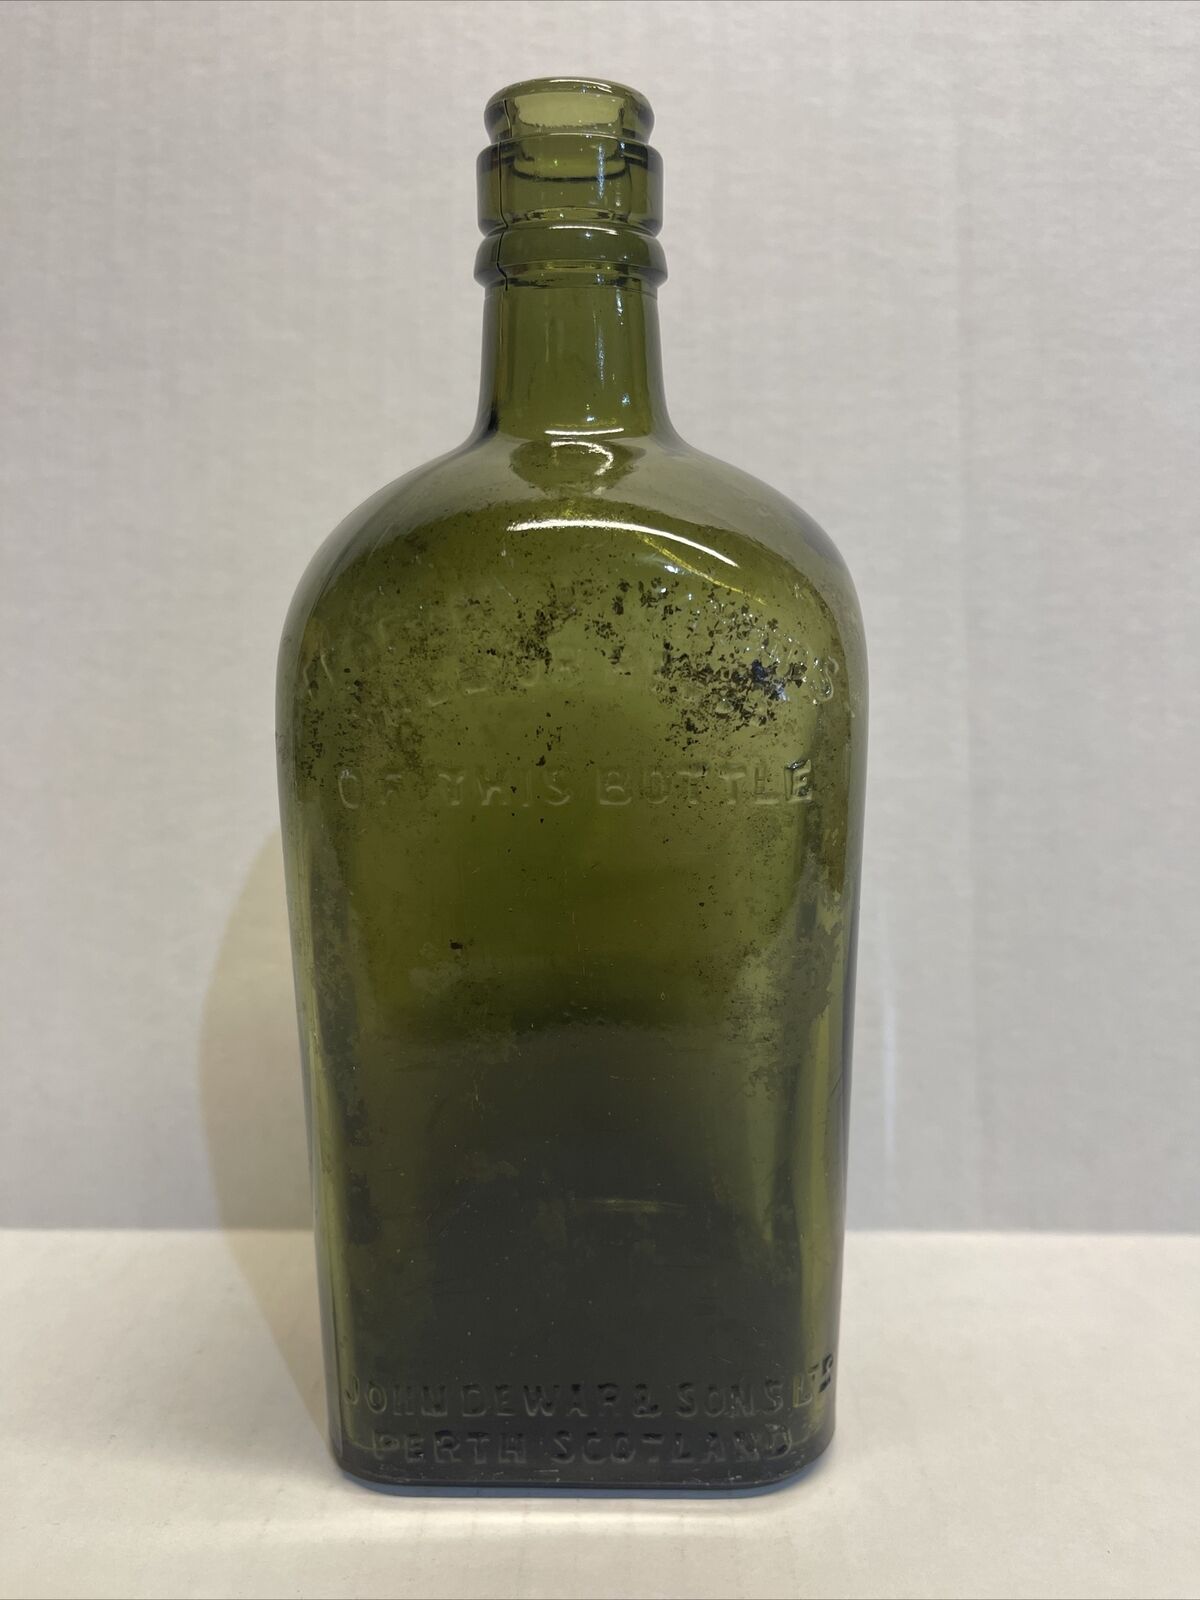 Vintage John Dewer & Sons Ltd. Scotch Whiskey Bottle Green Glass Perth Scotland